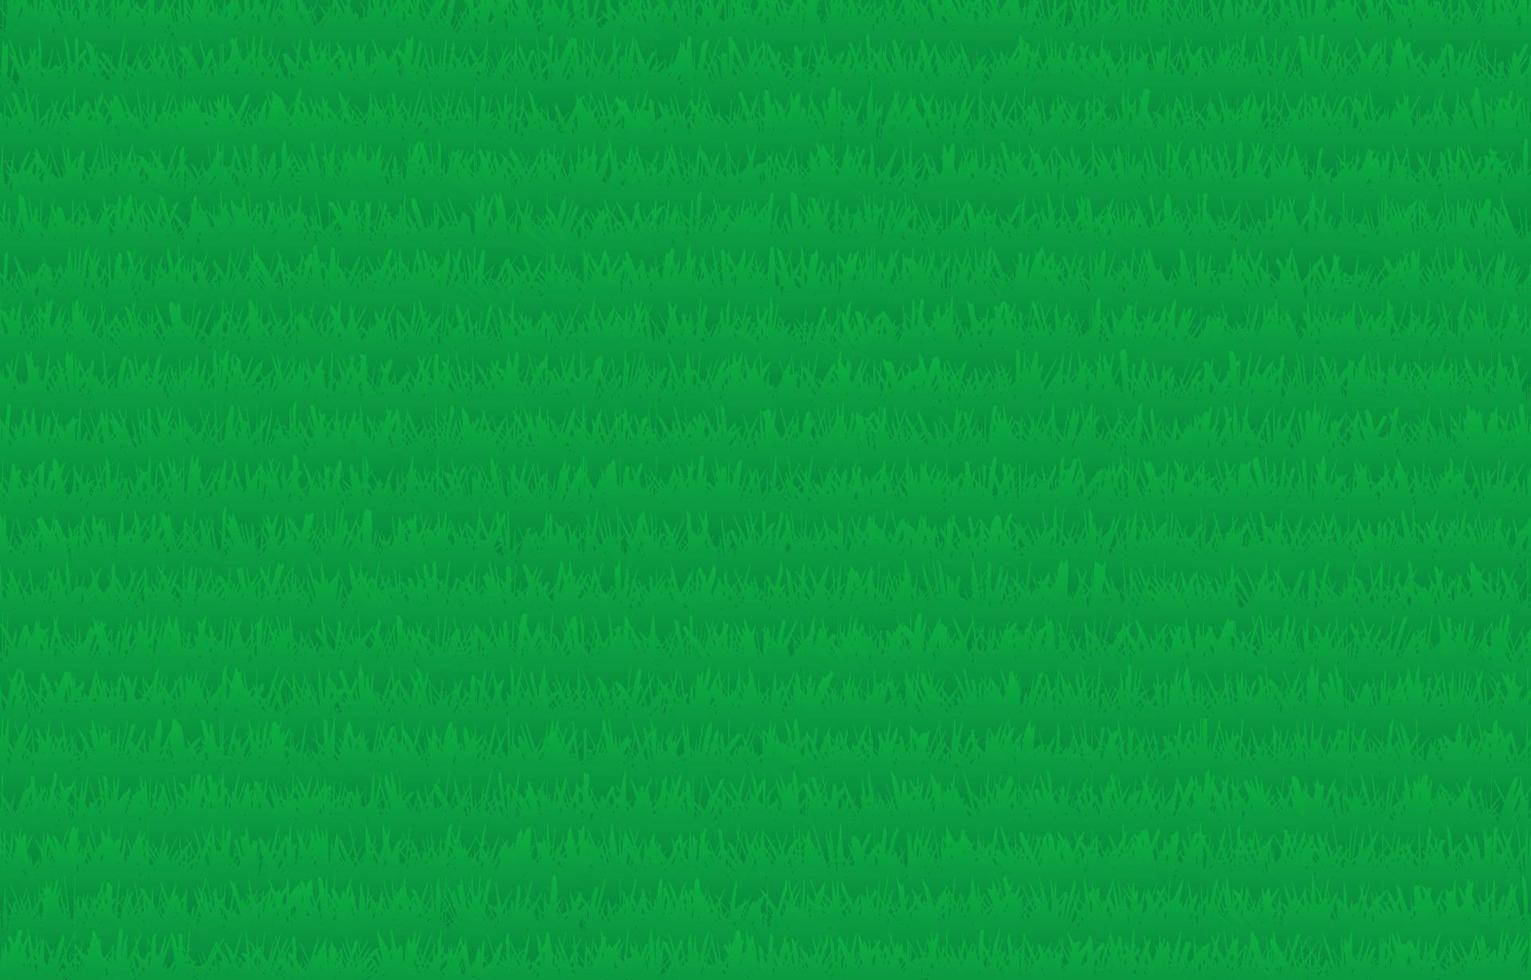 verde césped textura, modelo para fútbol o verano deporte campo. vector ilustre fondos